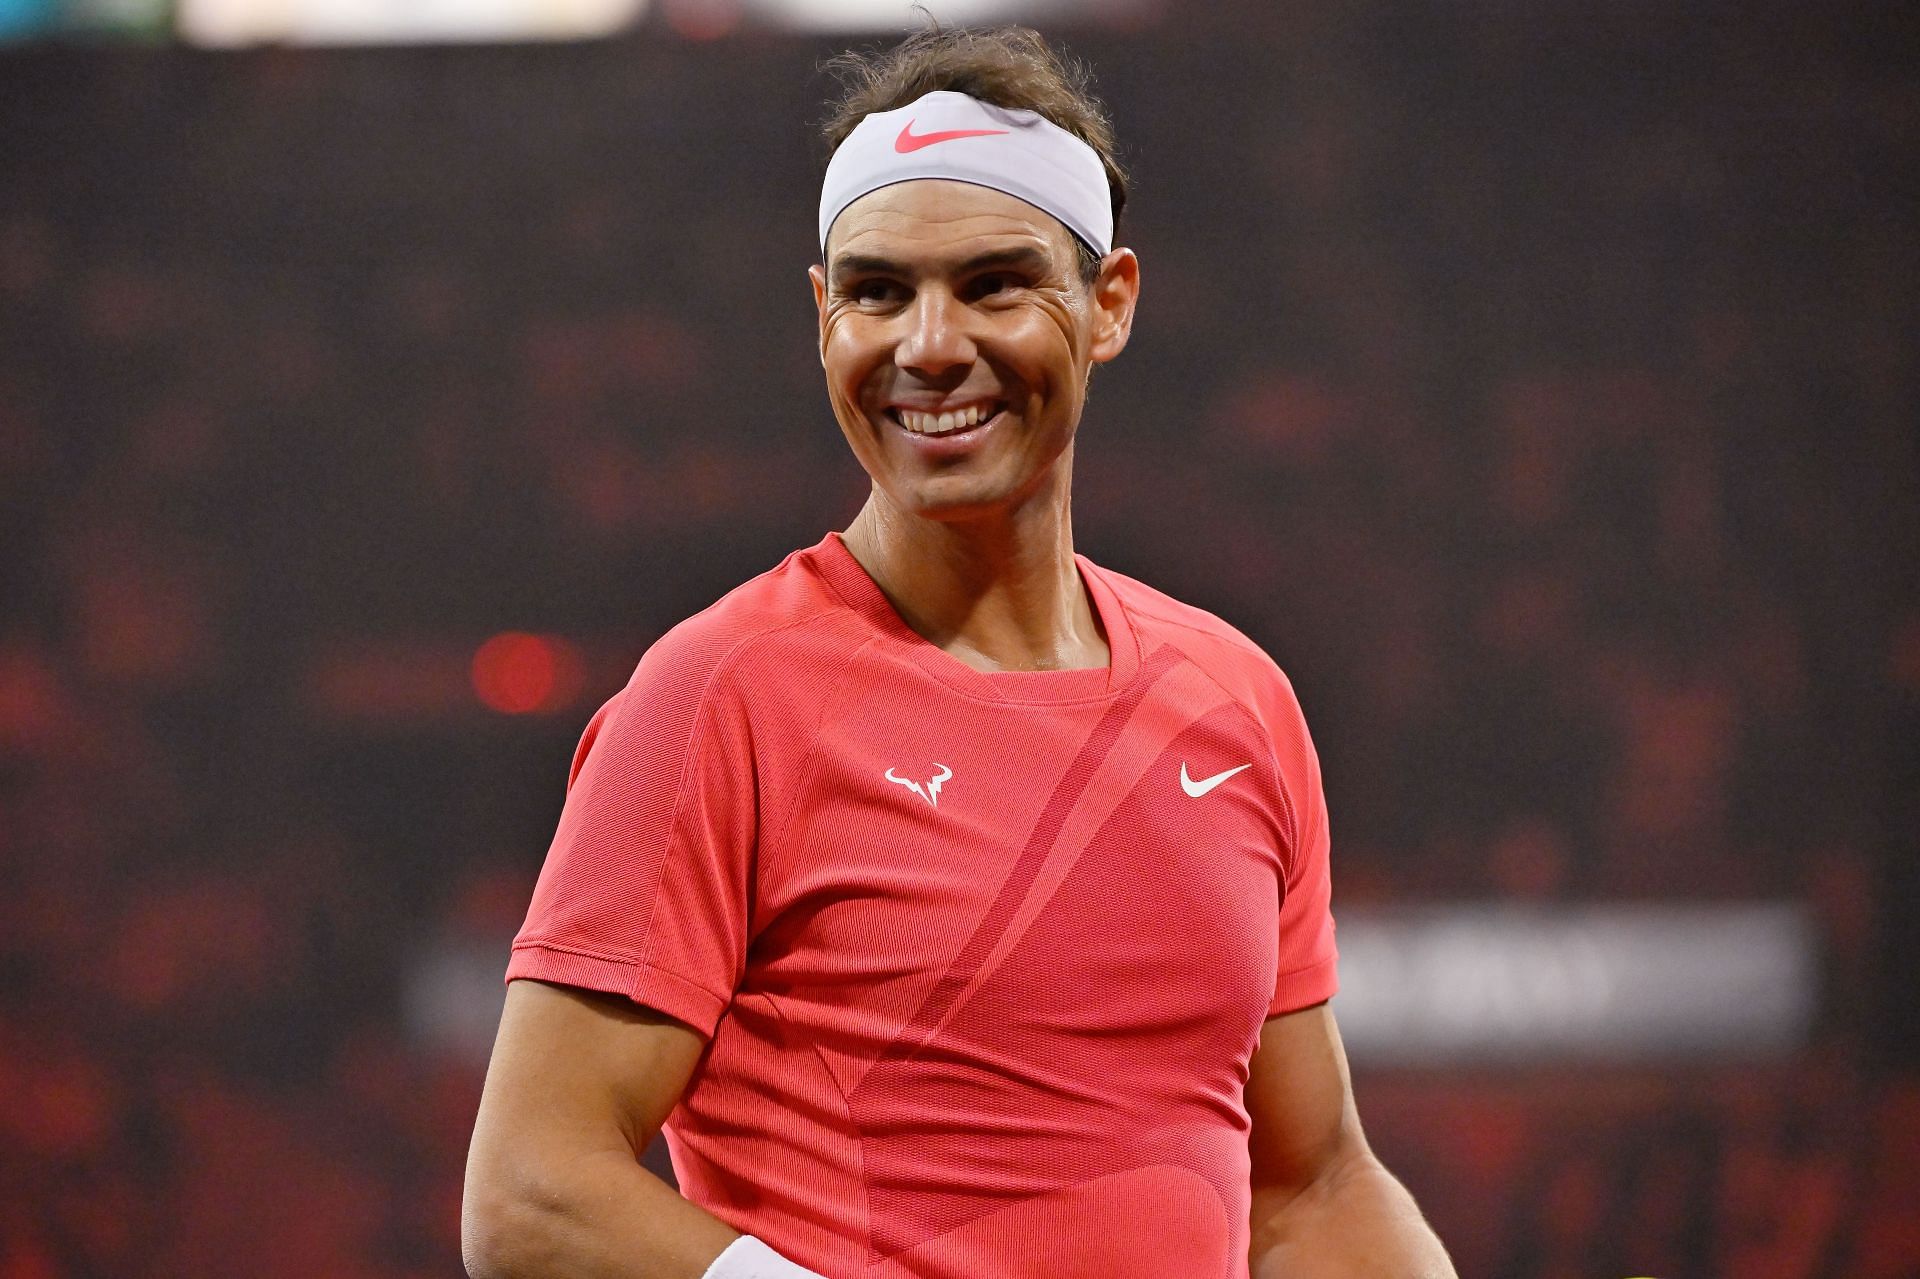 Nadal at the Netflix Slam, A Live Netflix Sports Event